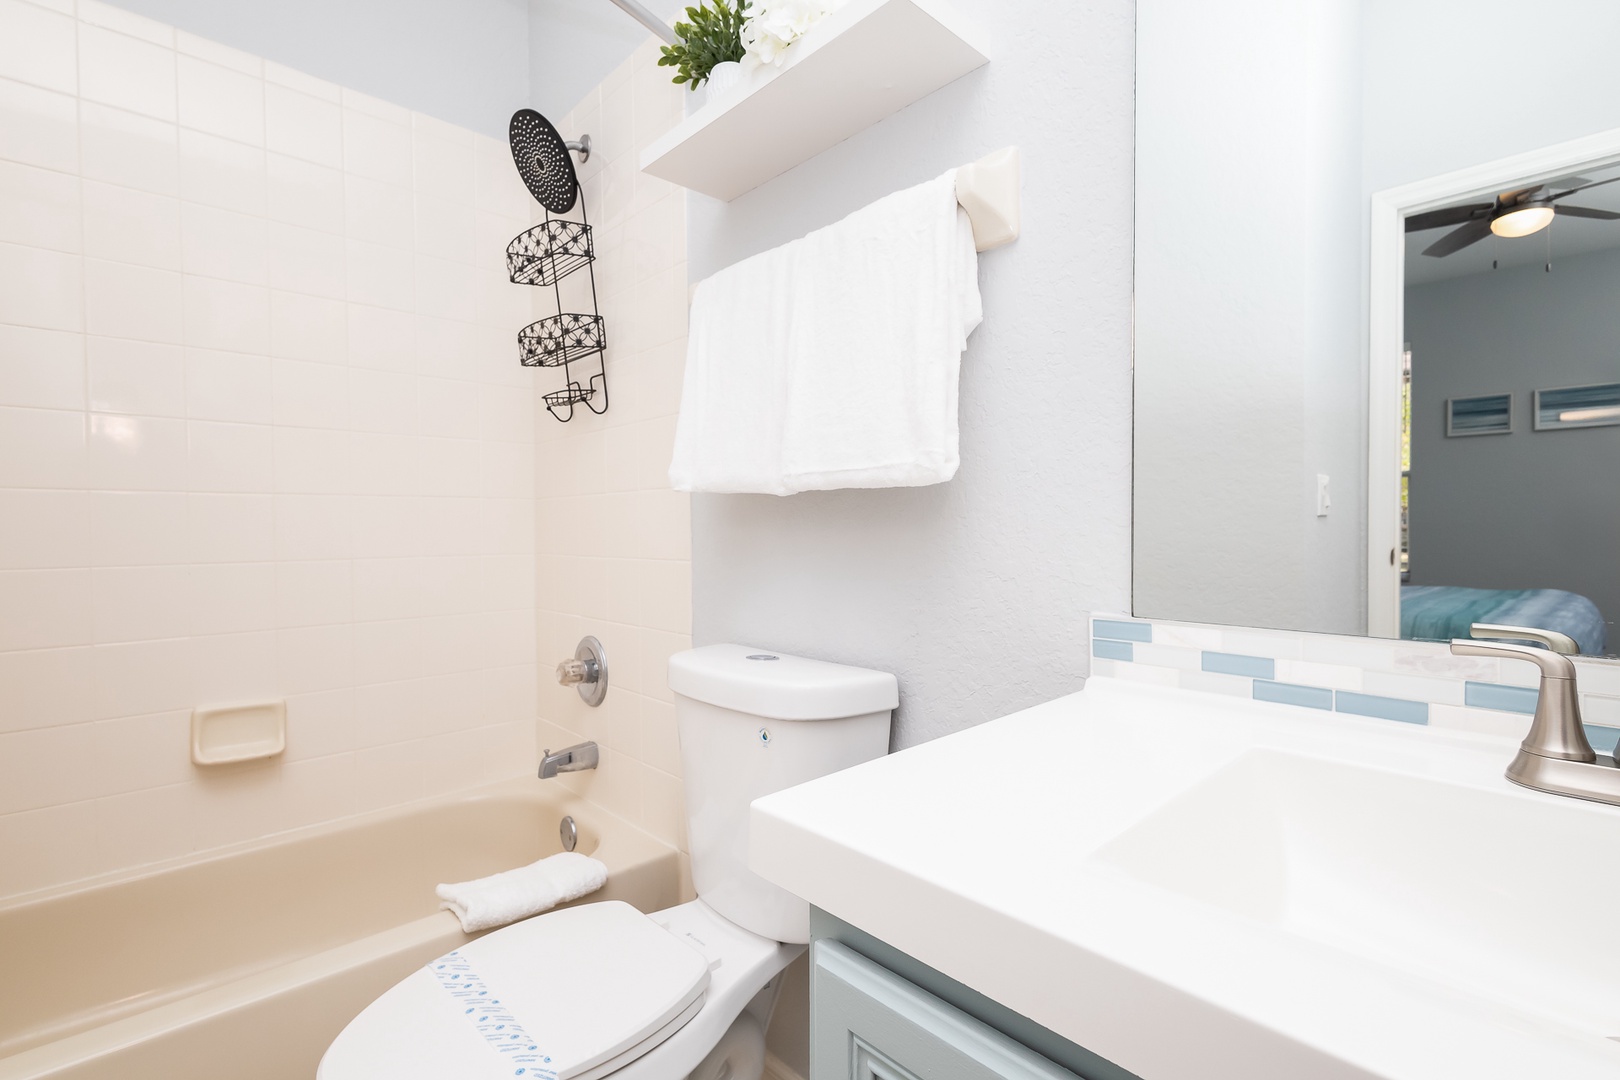 A single vanity & shower/tub combo await in the 1st-floor ensuite bath